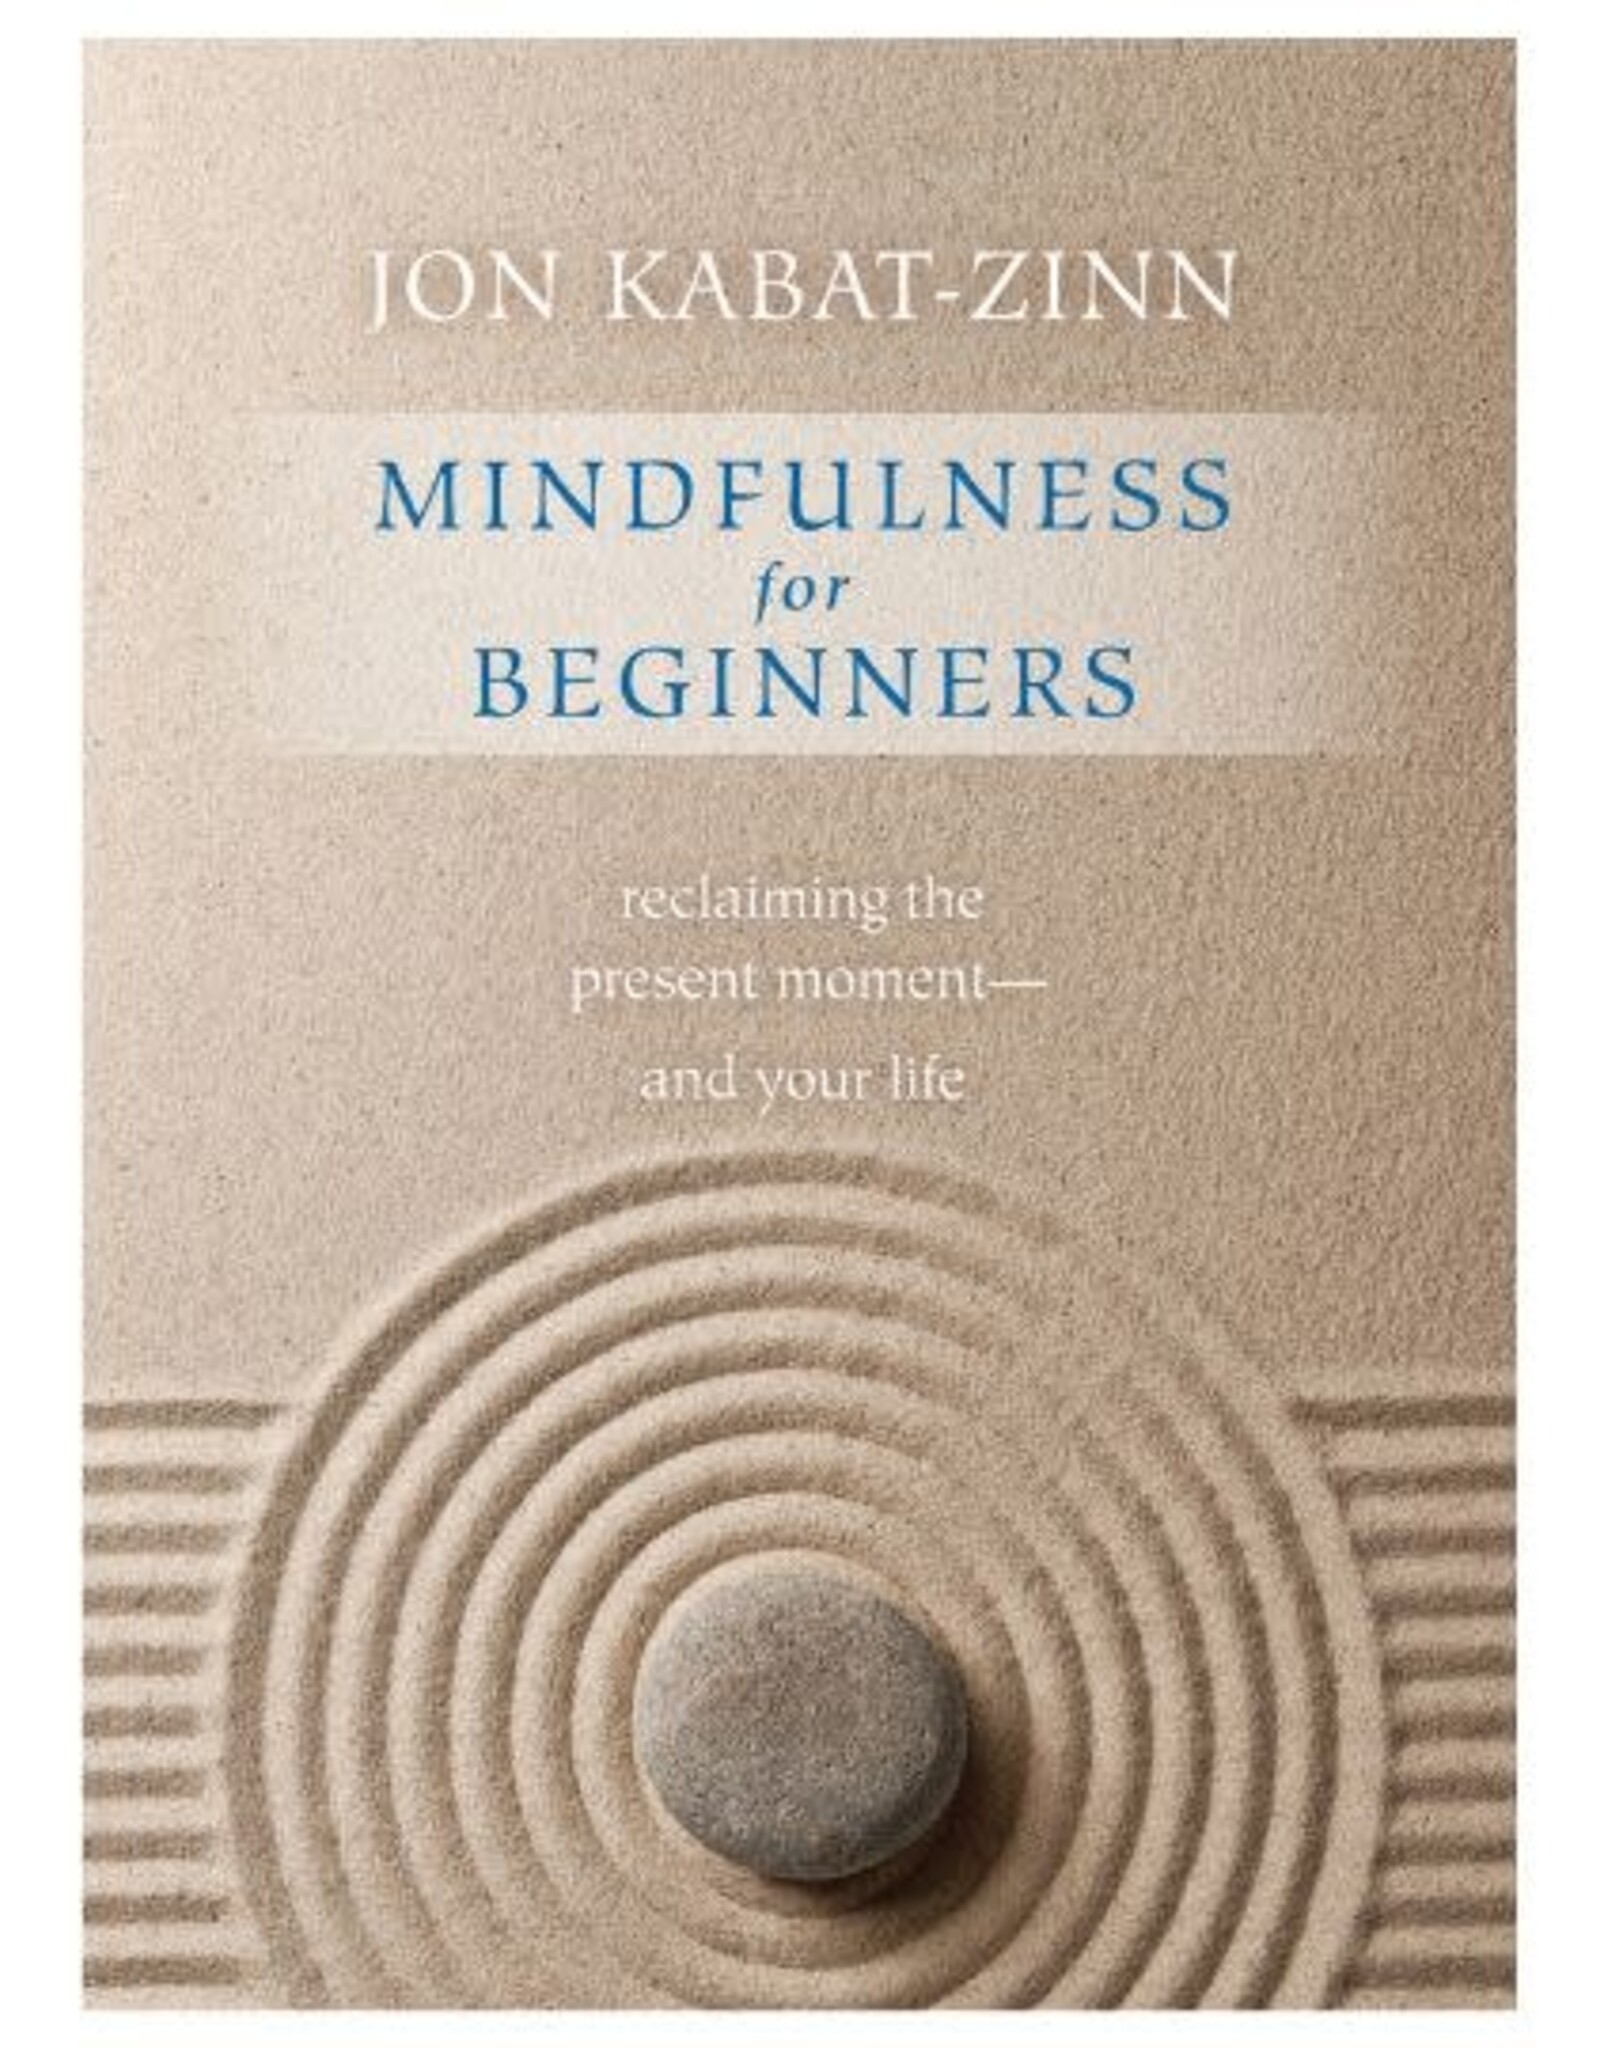 Jon Kabat-Zinn Mindfulness for Beginners by Jon Kabat-Zinn